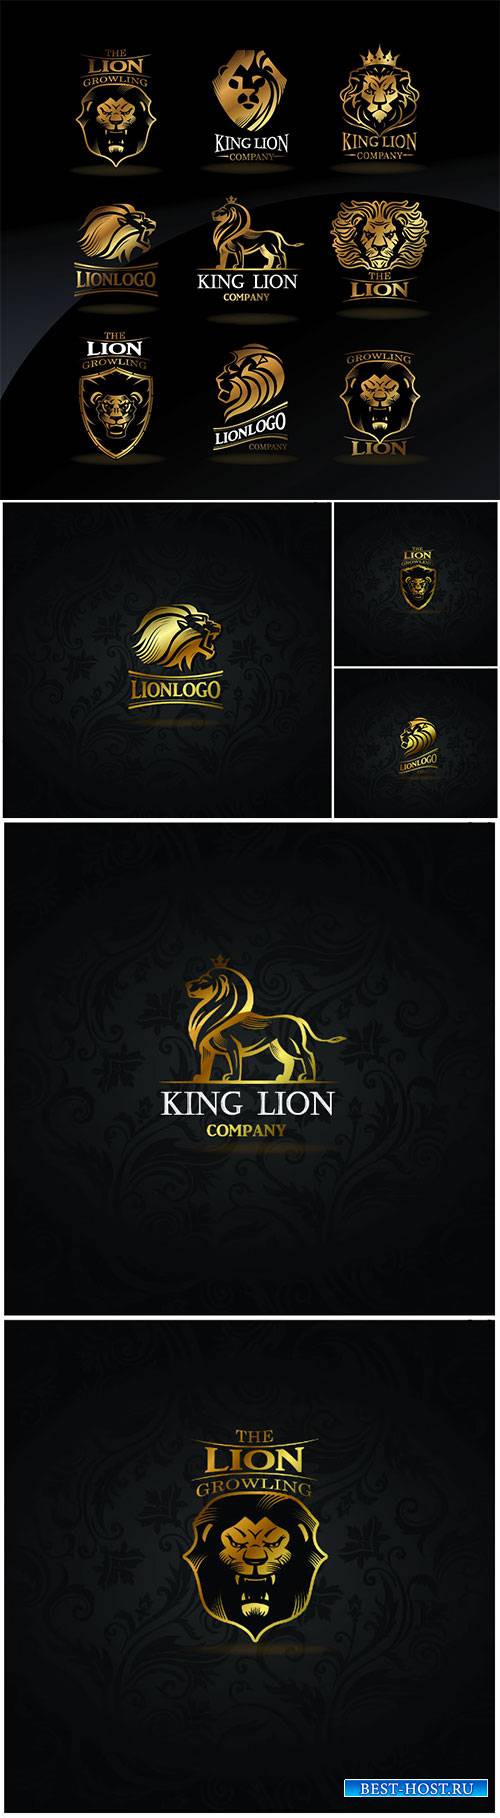 Emblems with golden Lions